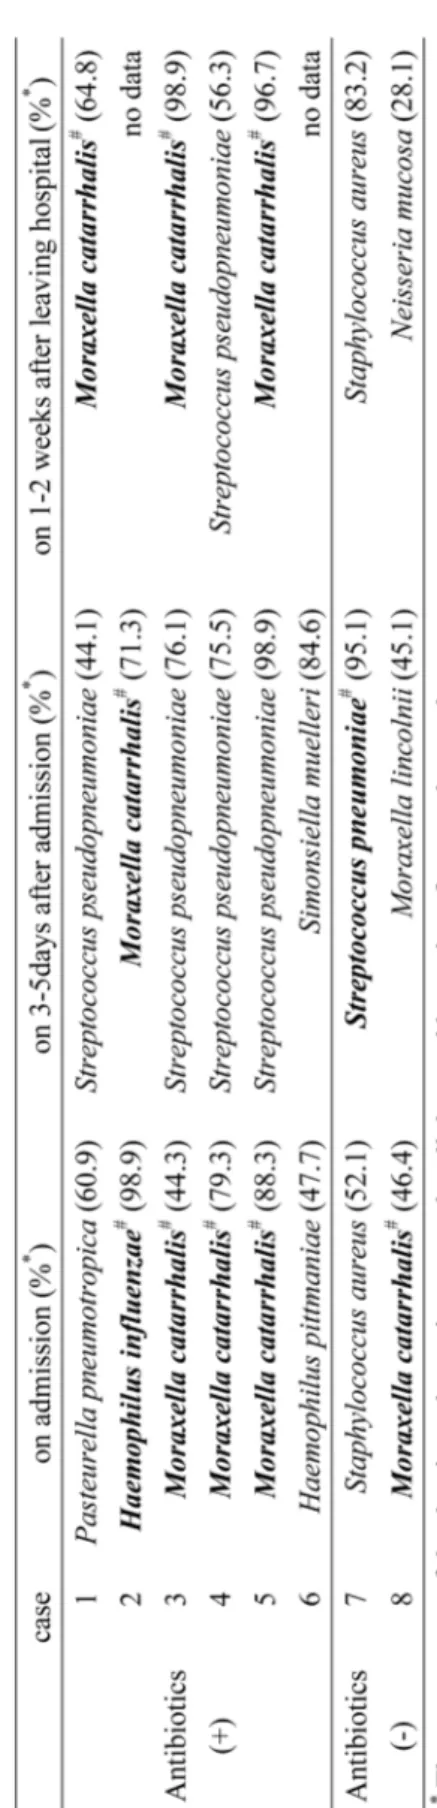 Table 3. Dominant bacterium of each nasopharyngeal sample